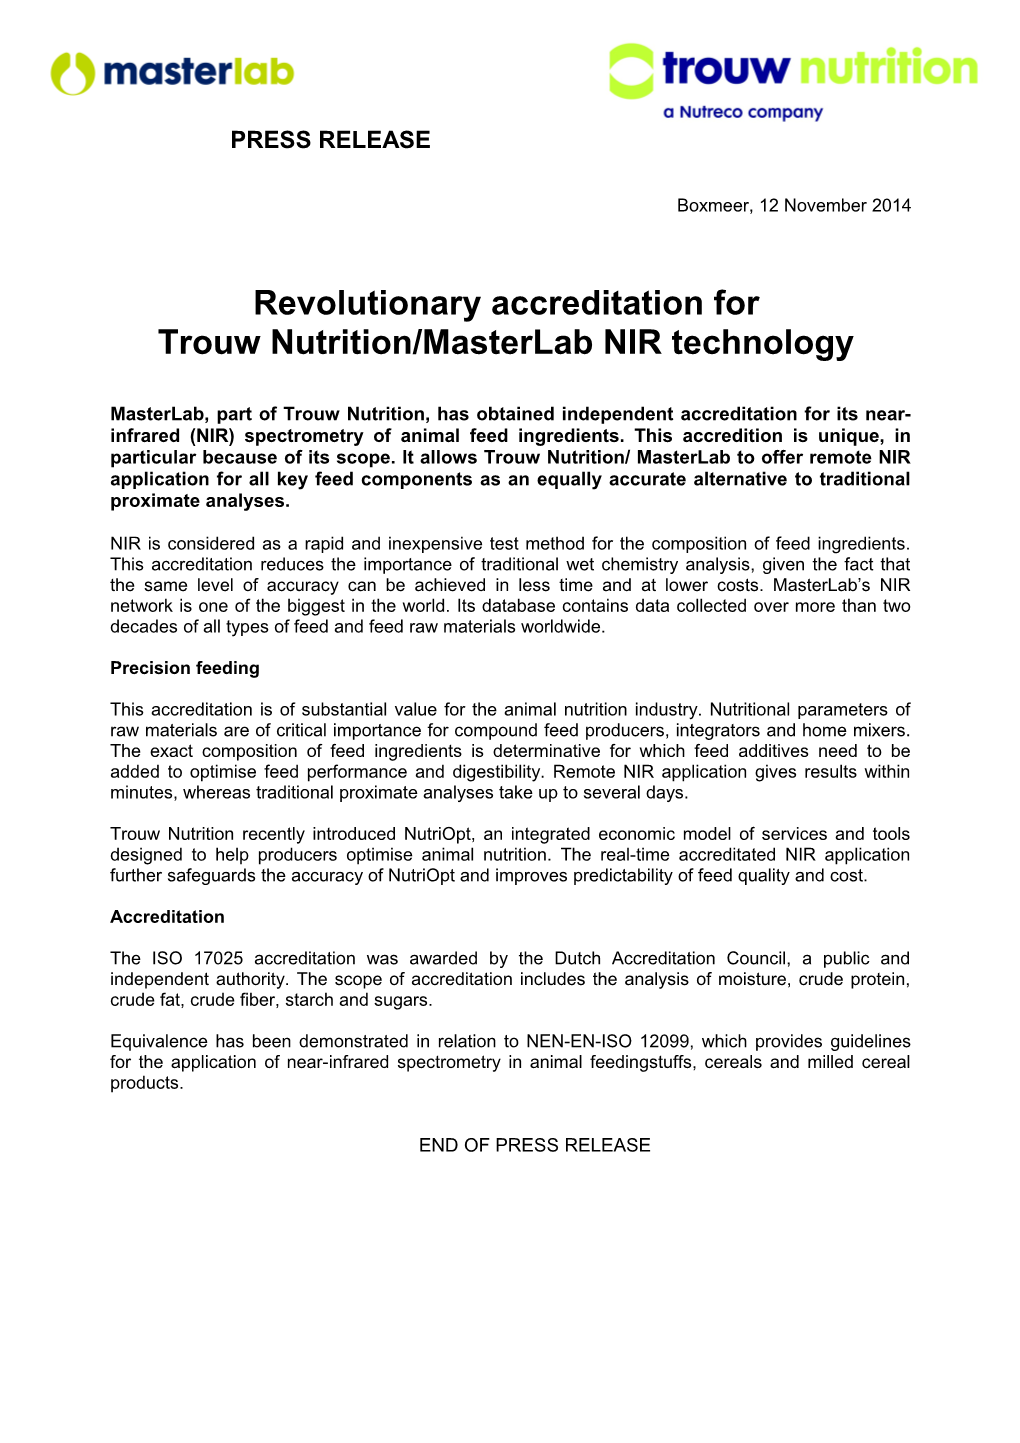 Revolutionary Accreditation for Trouw Nutrition/Masterlab NIR Technology